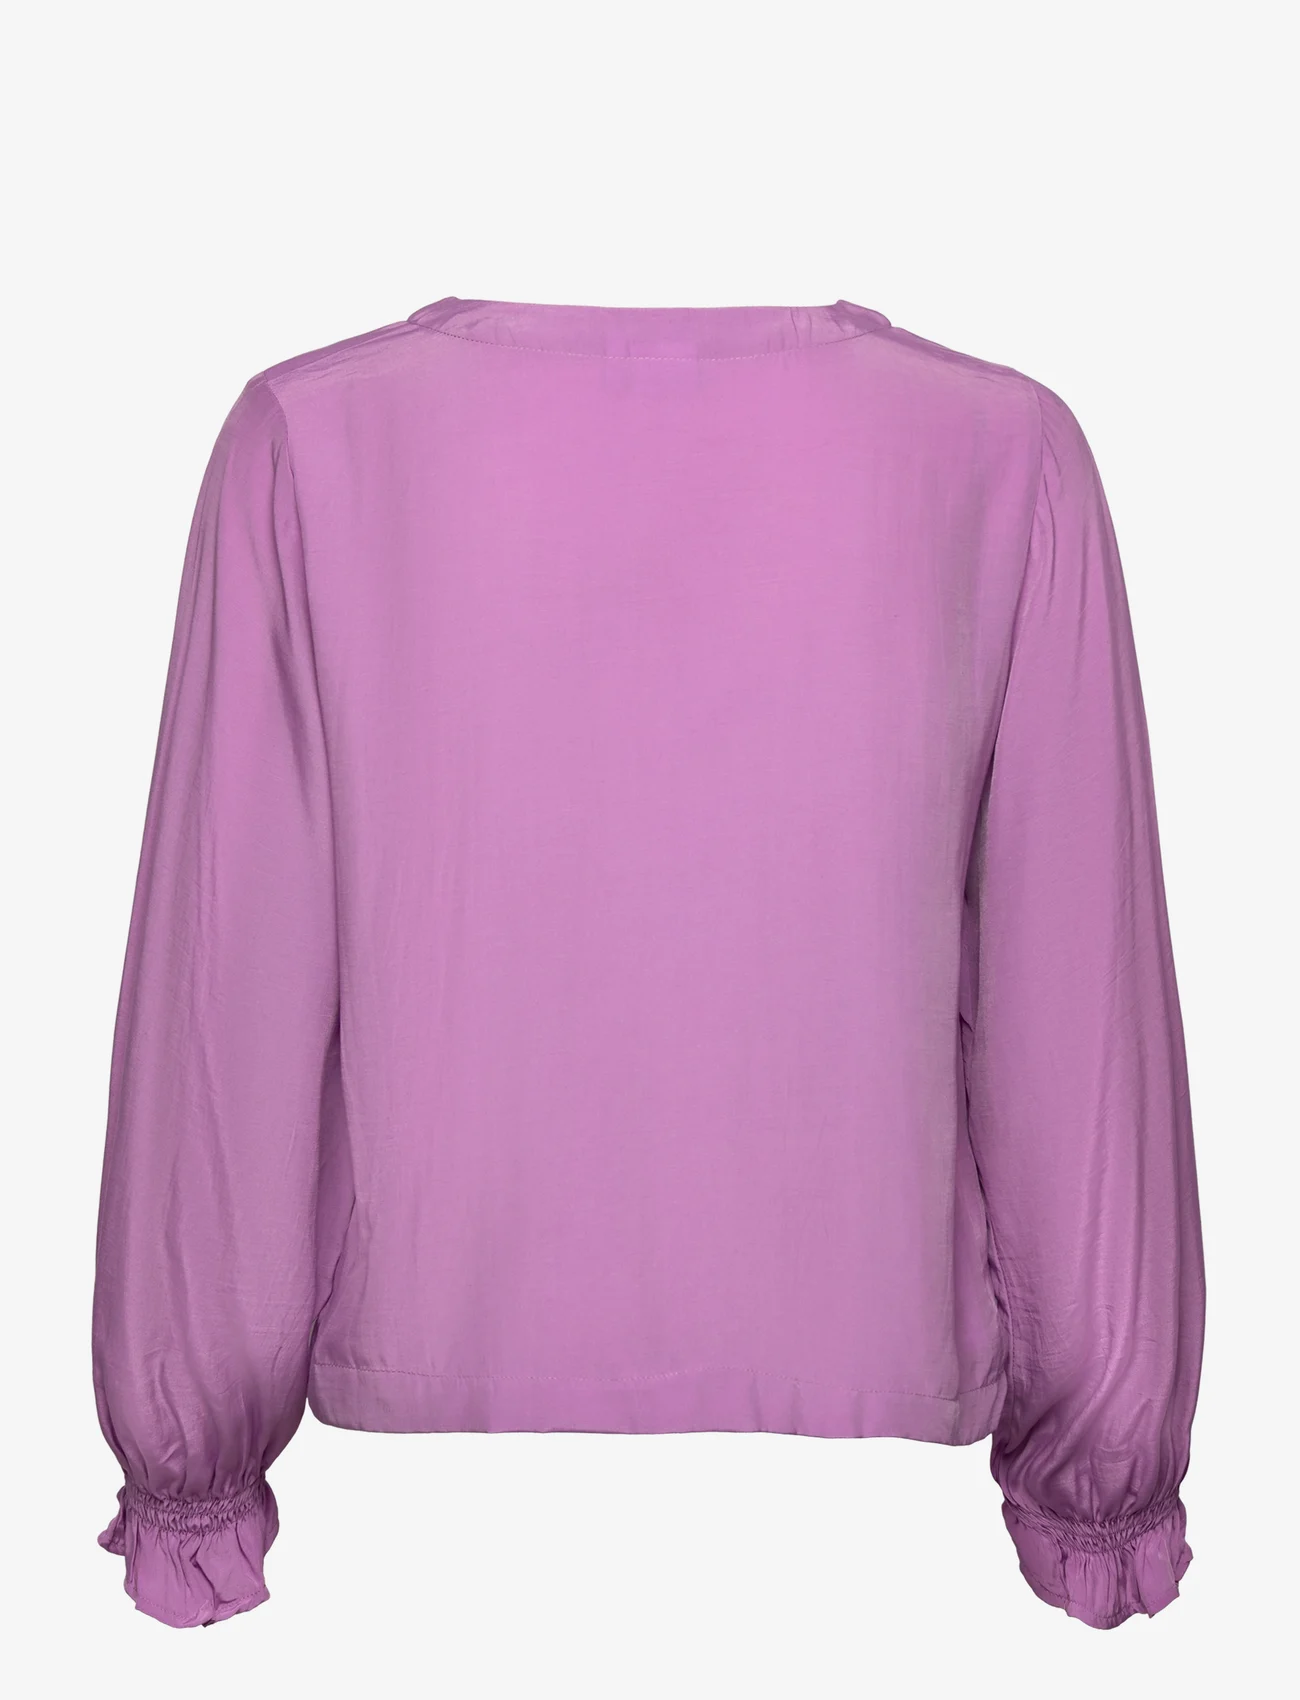 Nümph - NUYVETTE SHIRT - overhemden met lange mouwen - african violet - 1